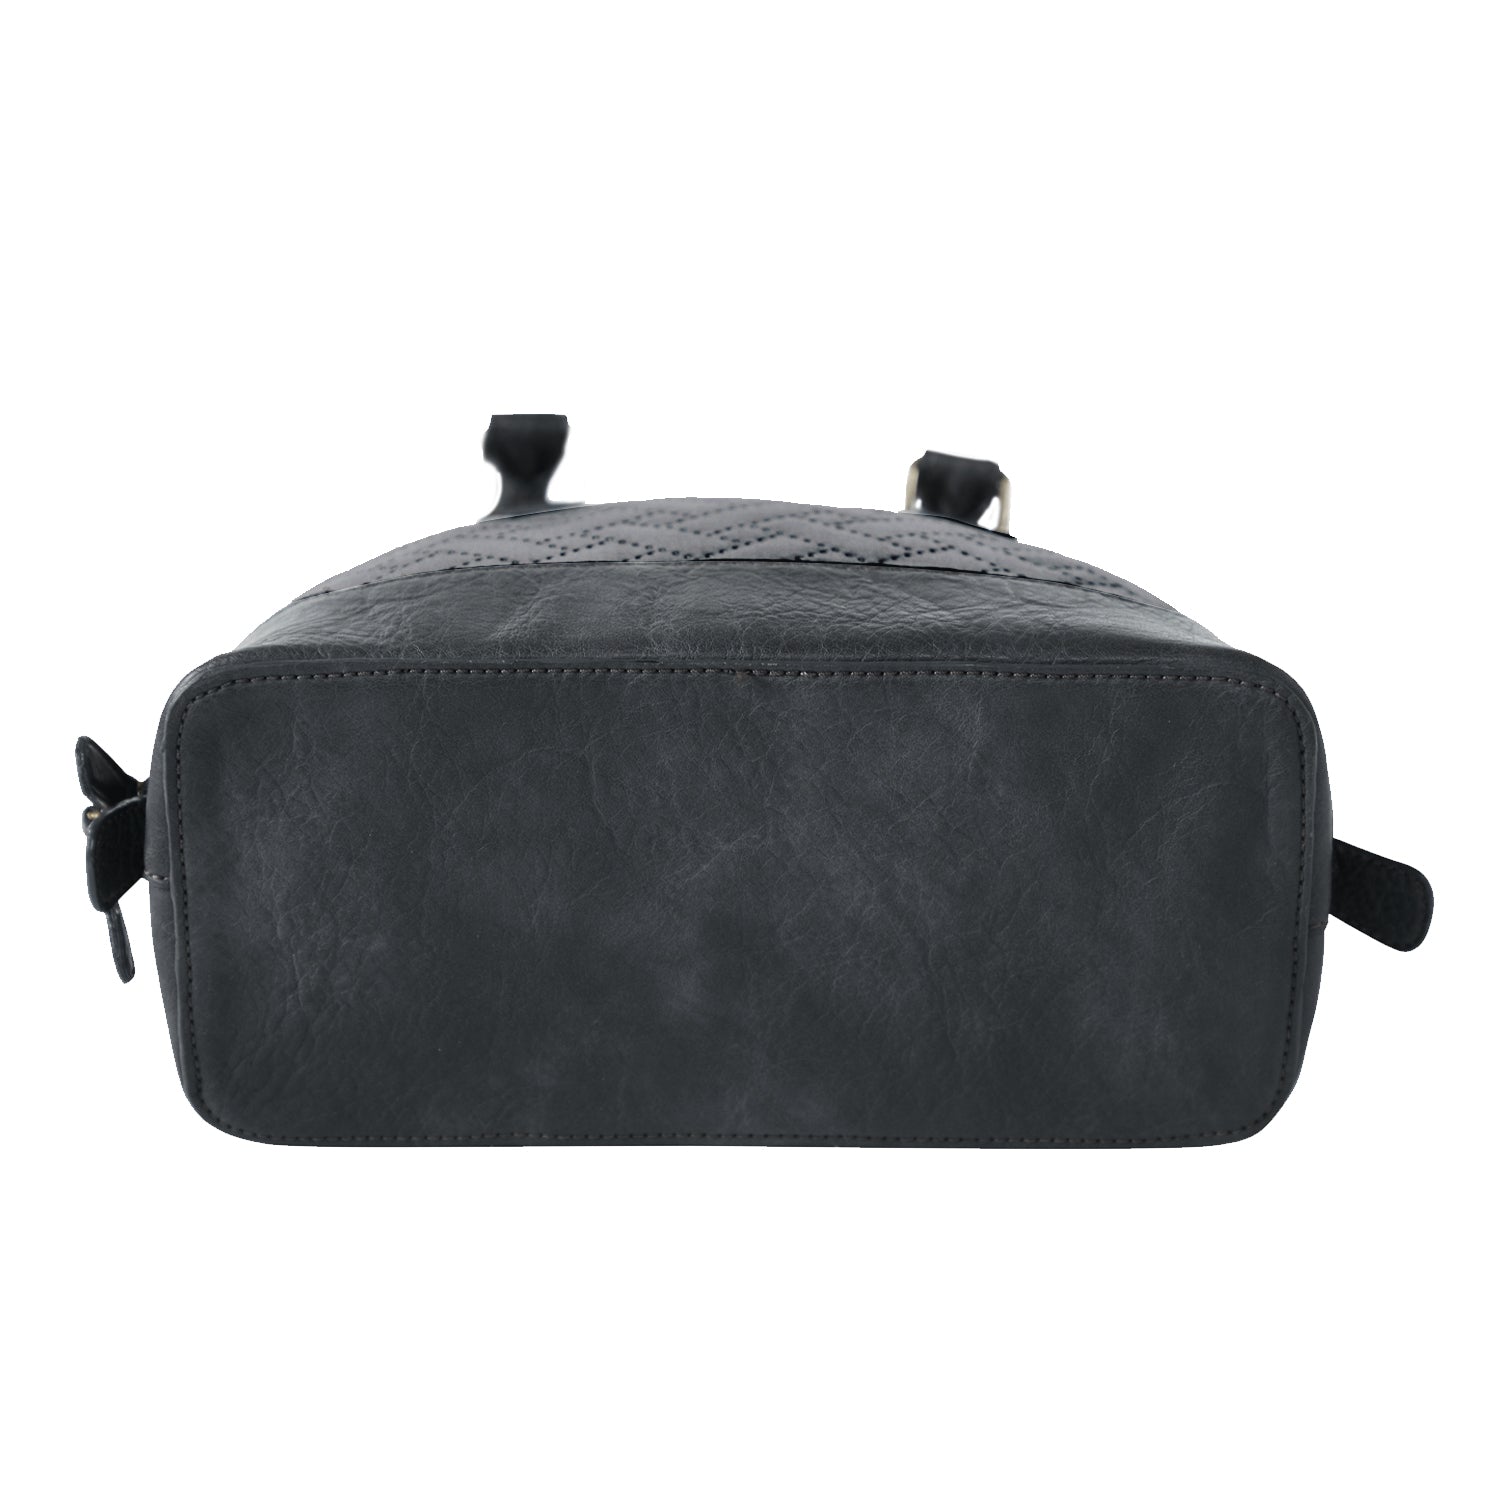 Mona B Small Handbag, Shoulder Bags For Shopping Travel With Stylish Design For Women: BLK - QRP-301 BLK - Handbag by Mona-B - Backpack, Flash Sale, Flat50, New Arrivals, Sale, Shop1999, Shop2999, Shop3999